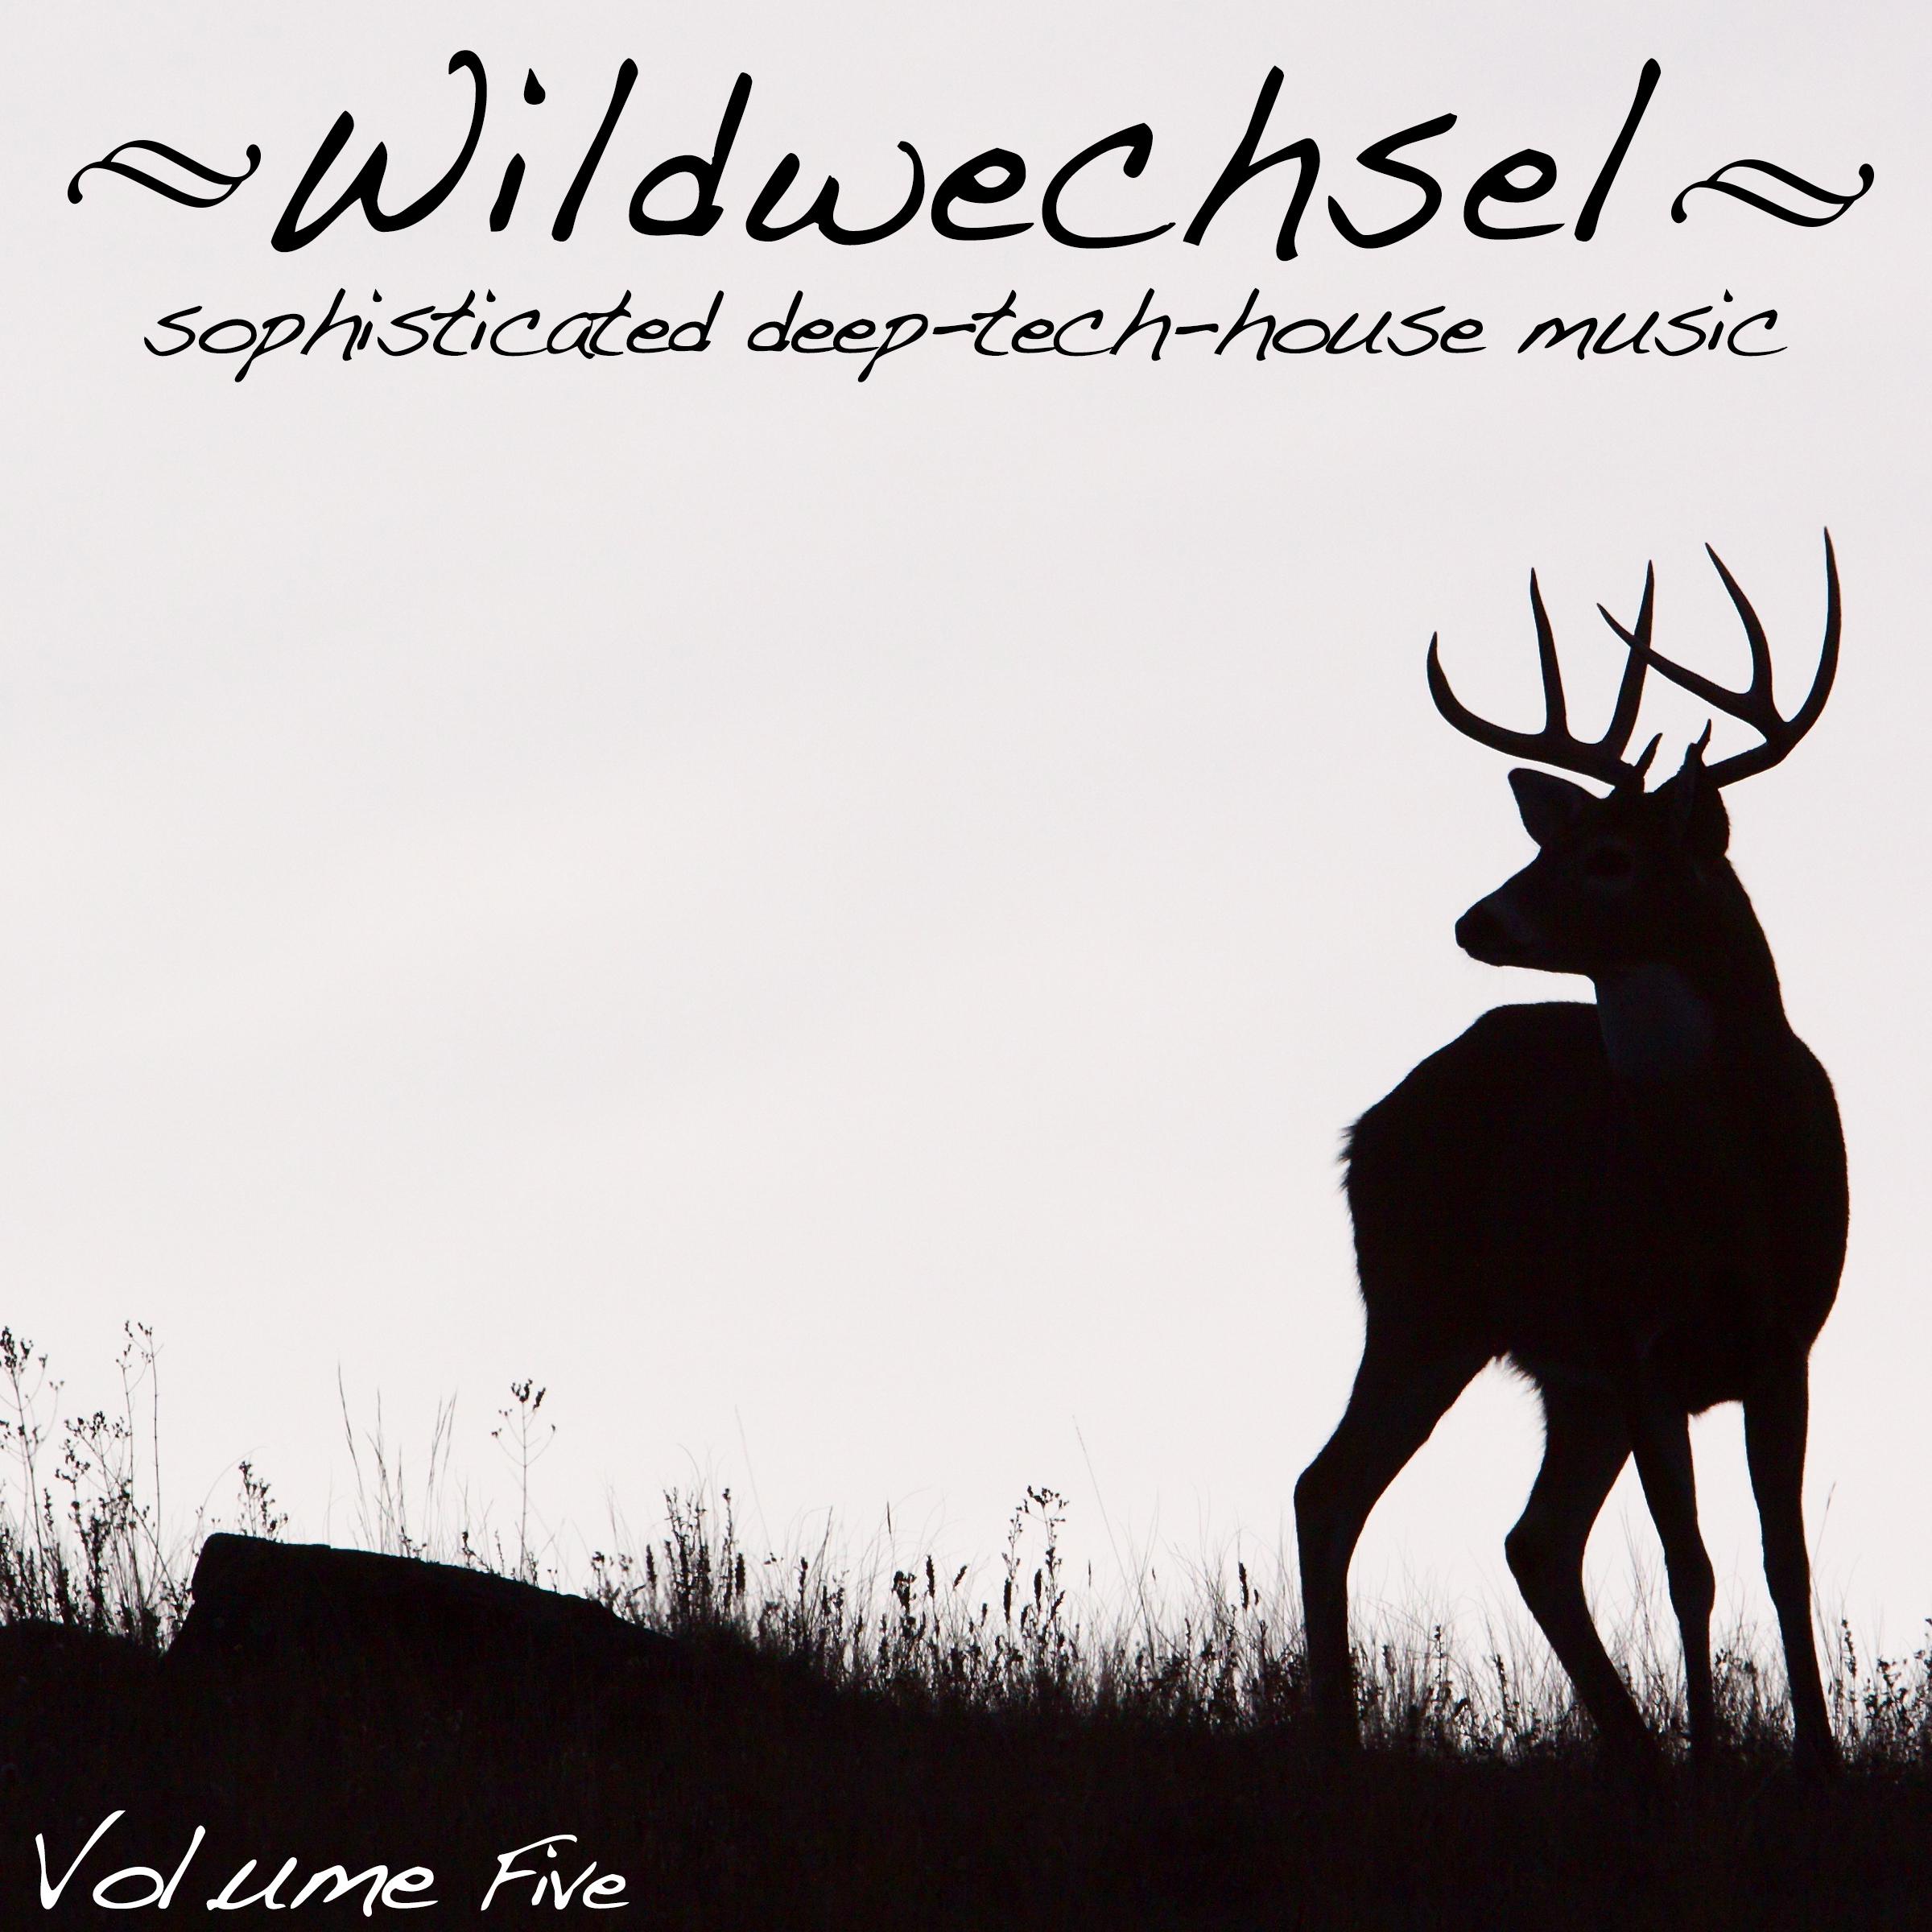 Wildwechsel, Vol. 5 - Sophisticated Deep Tech-House Music